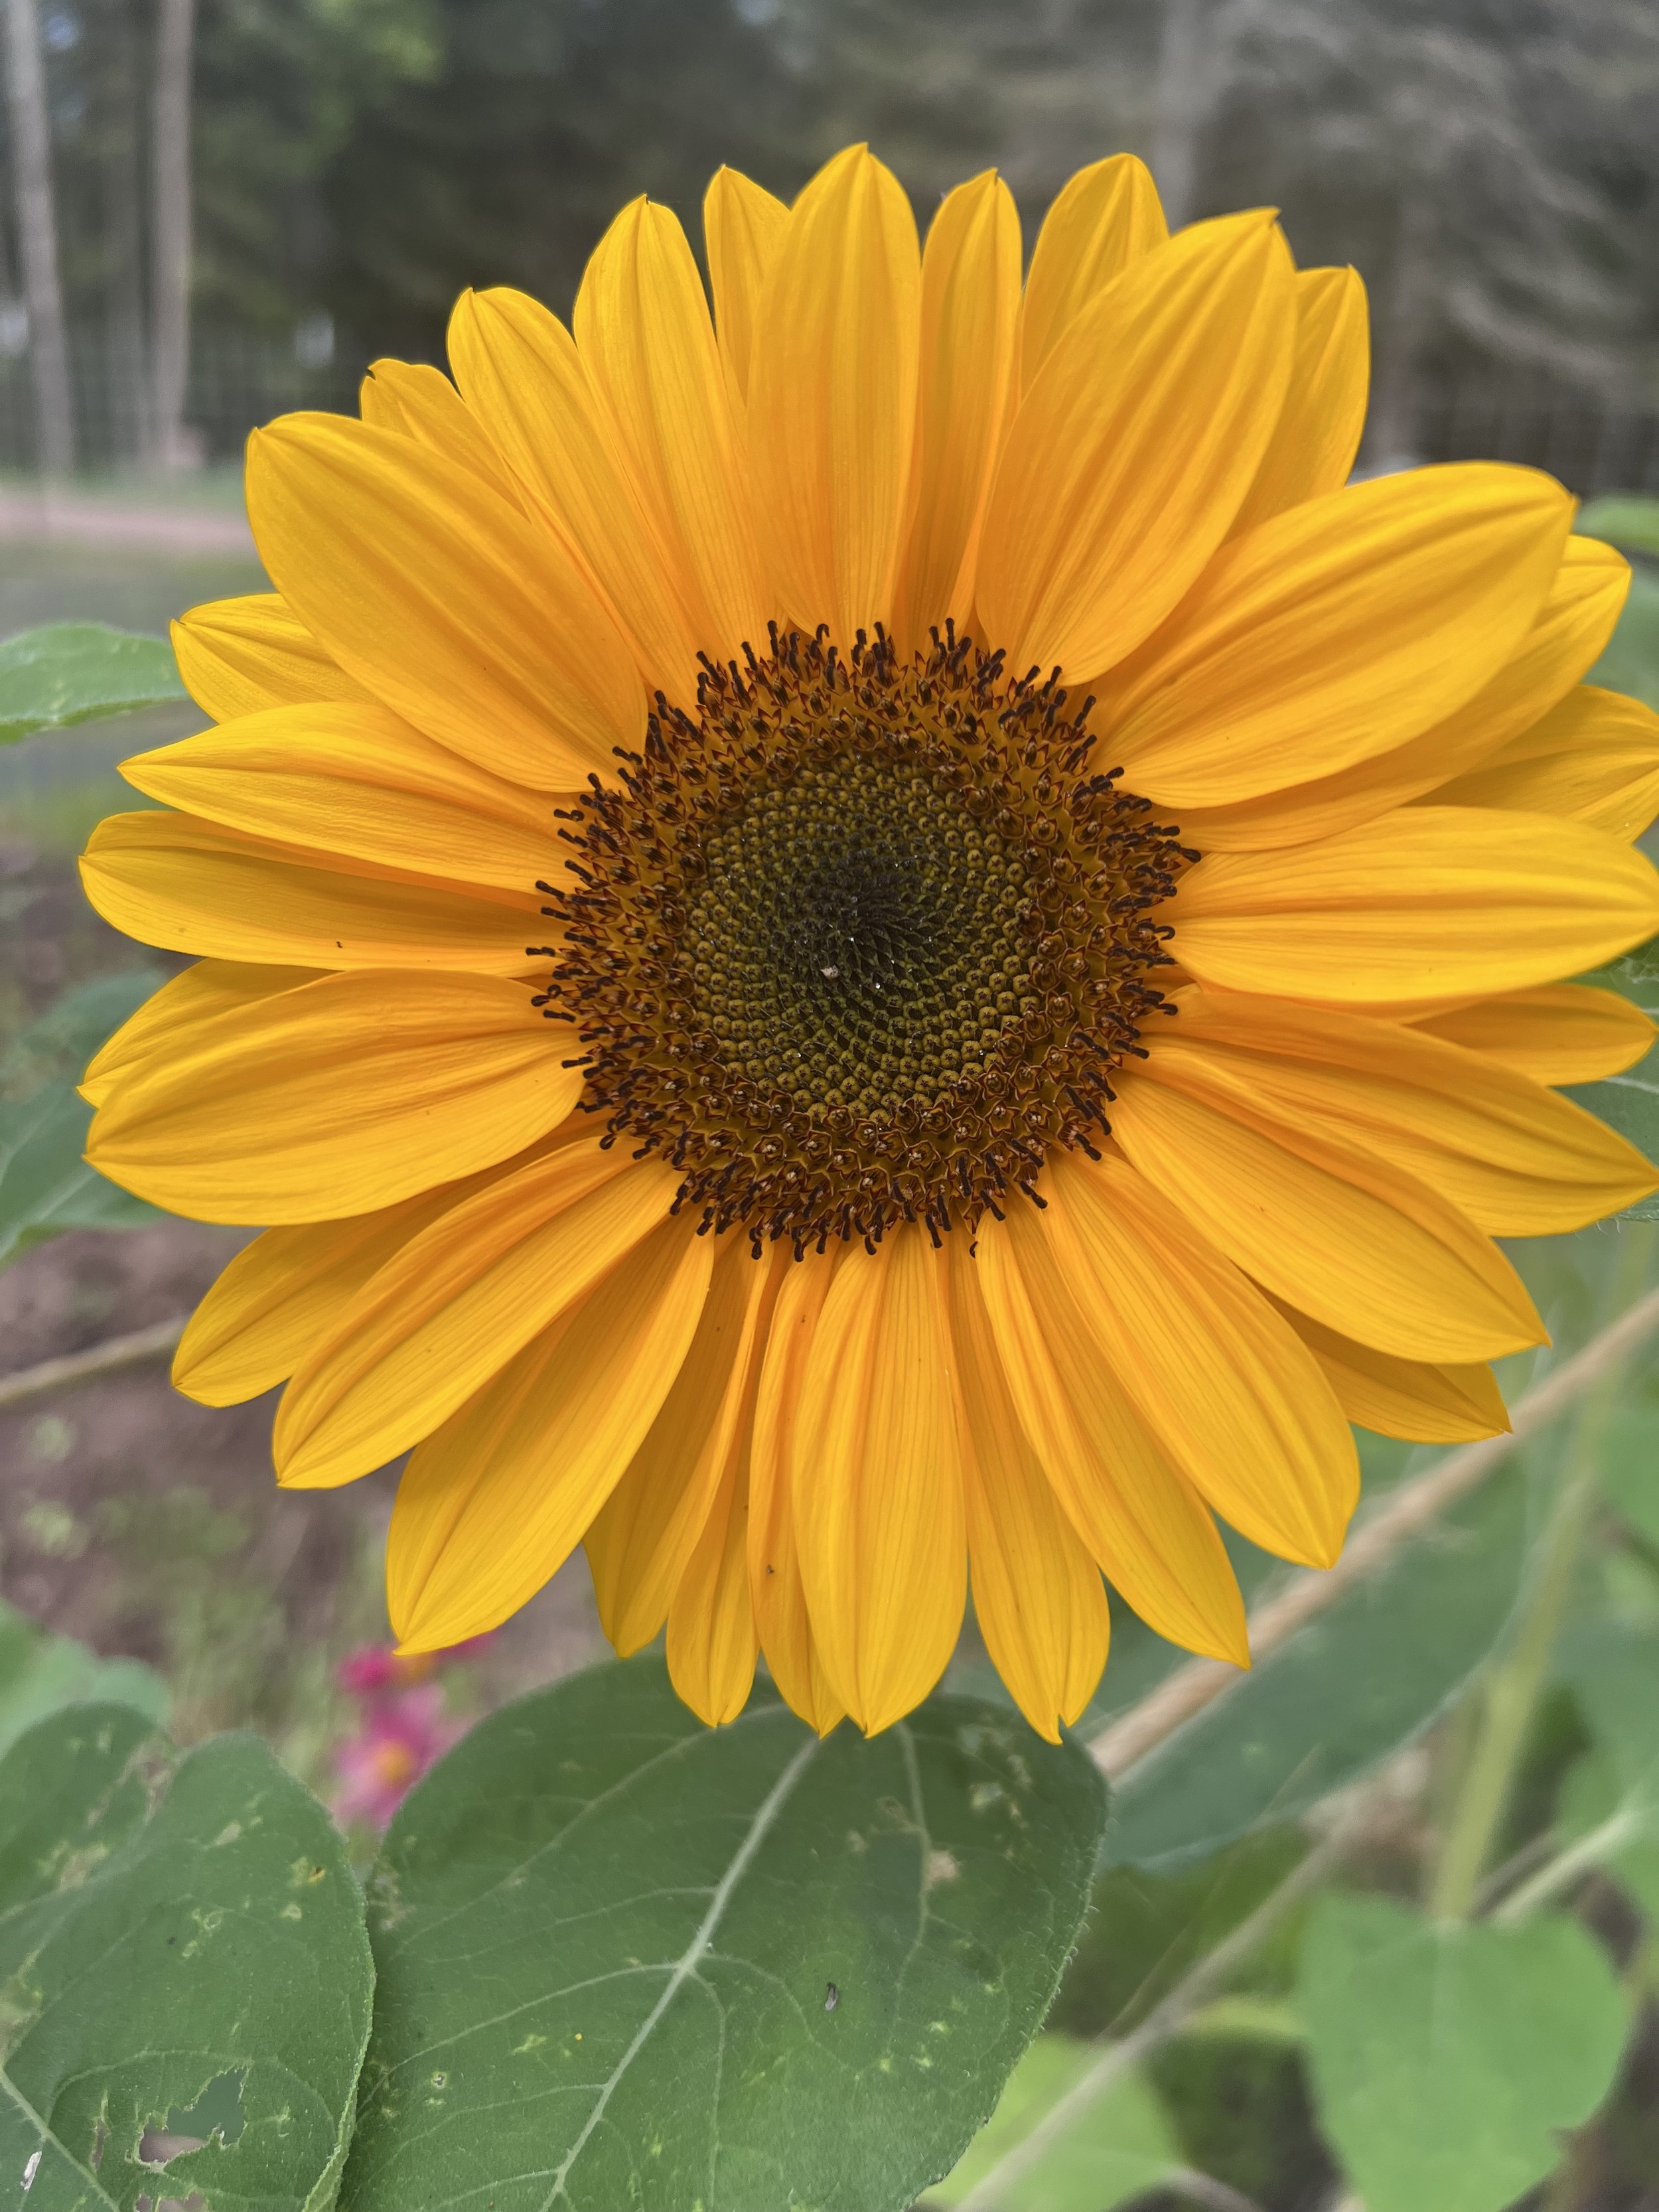 The First Sunflower!